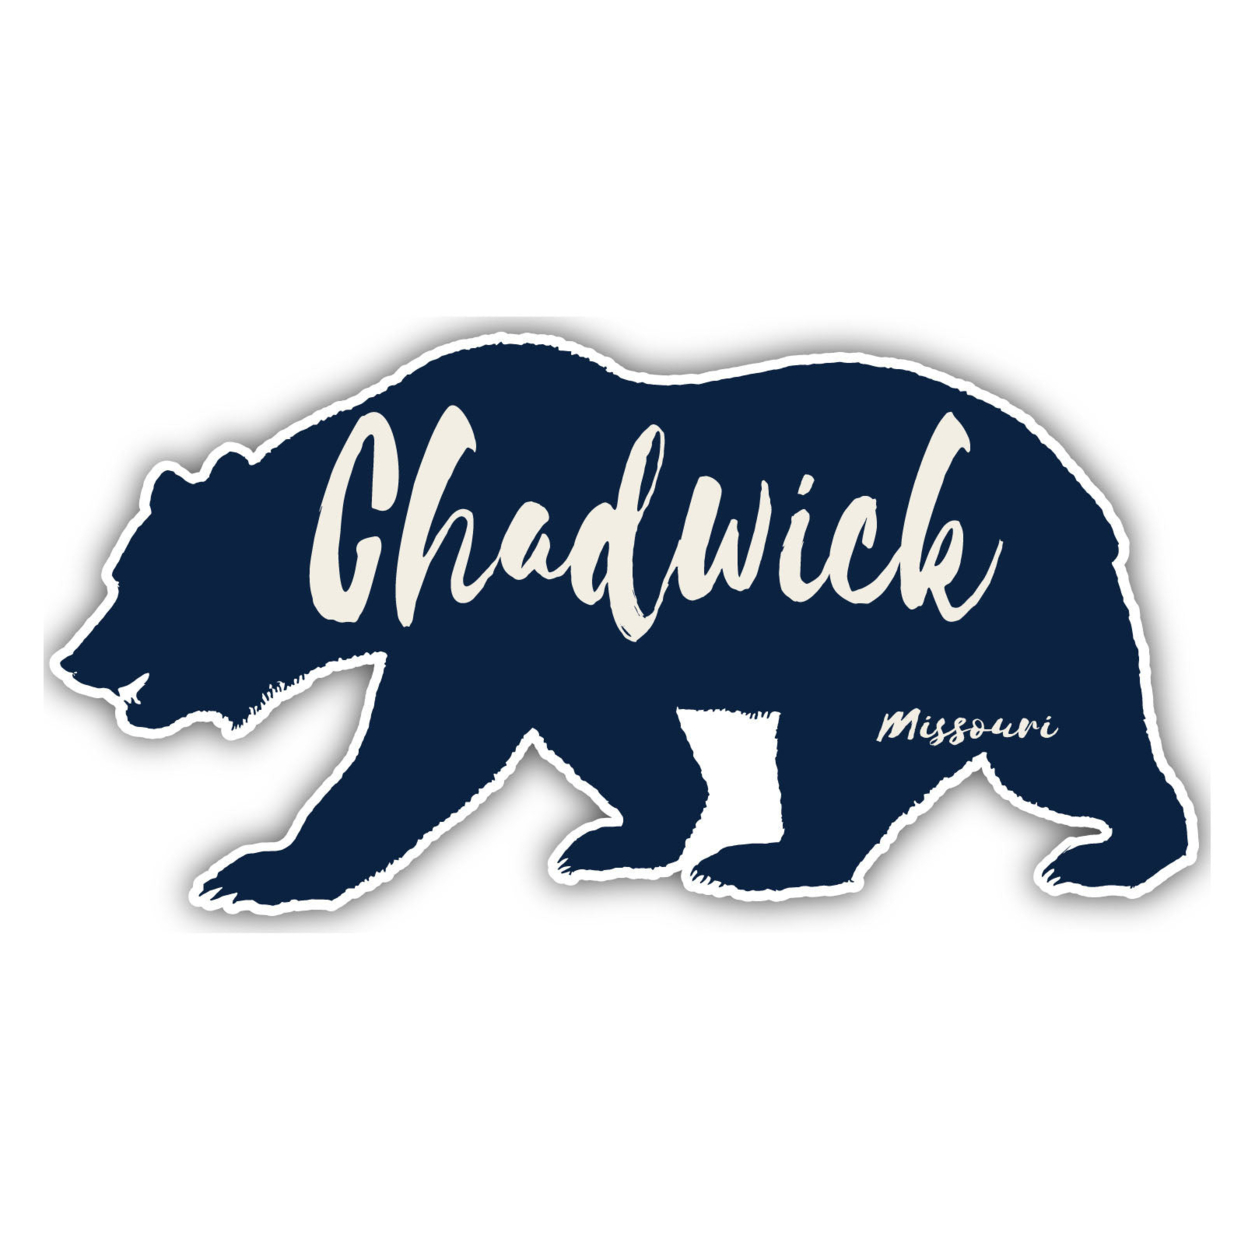 Chadwick Missouri Souvenir Decorative Stickers (Choose Theme And Size) - 4-Pack, 8-Inch, Tent